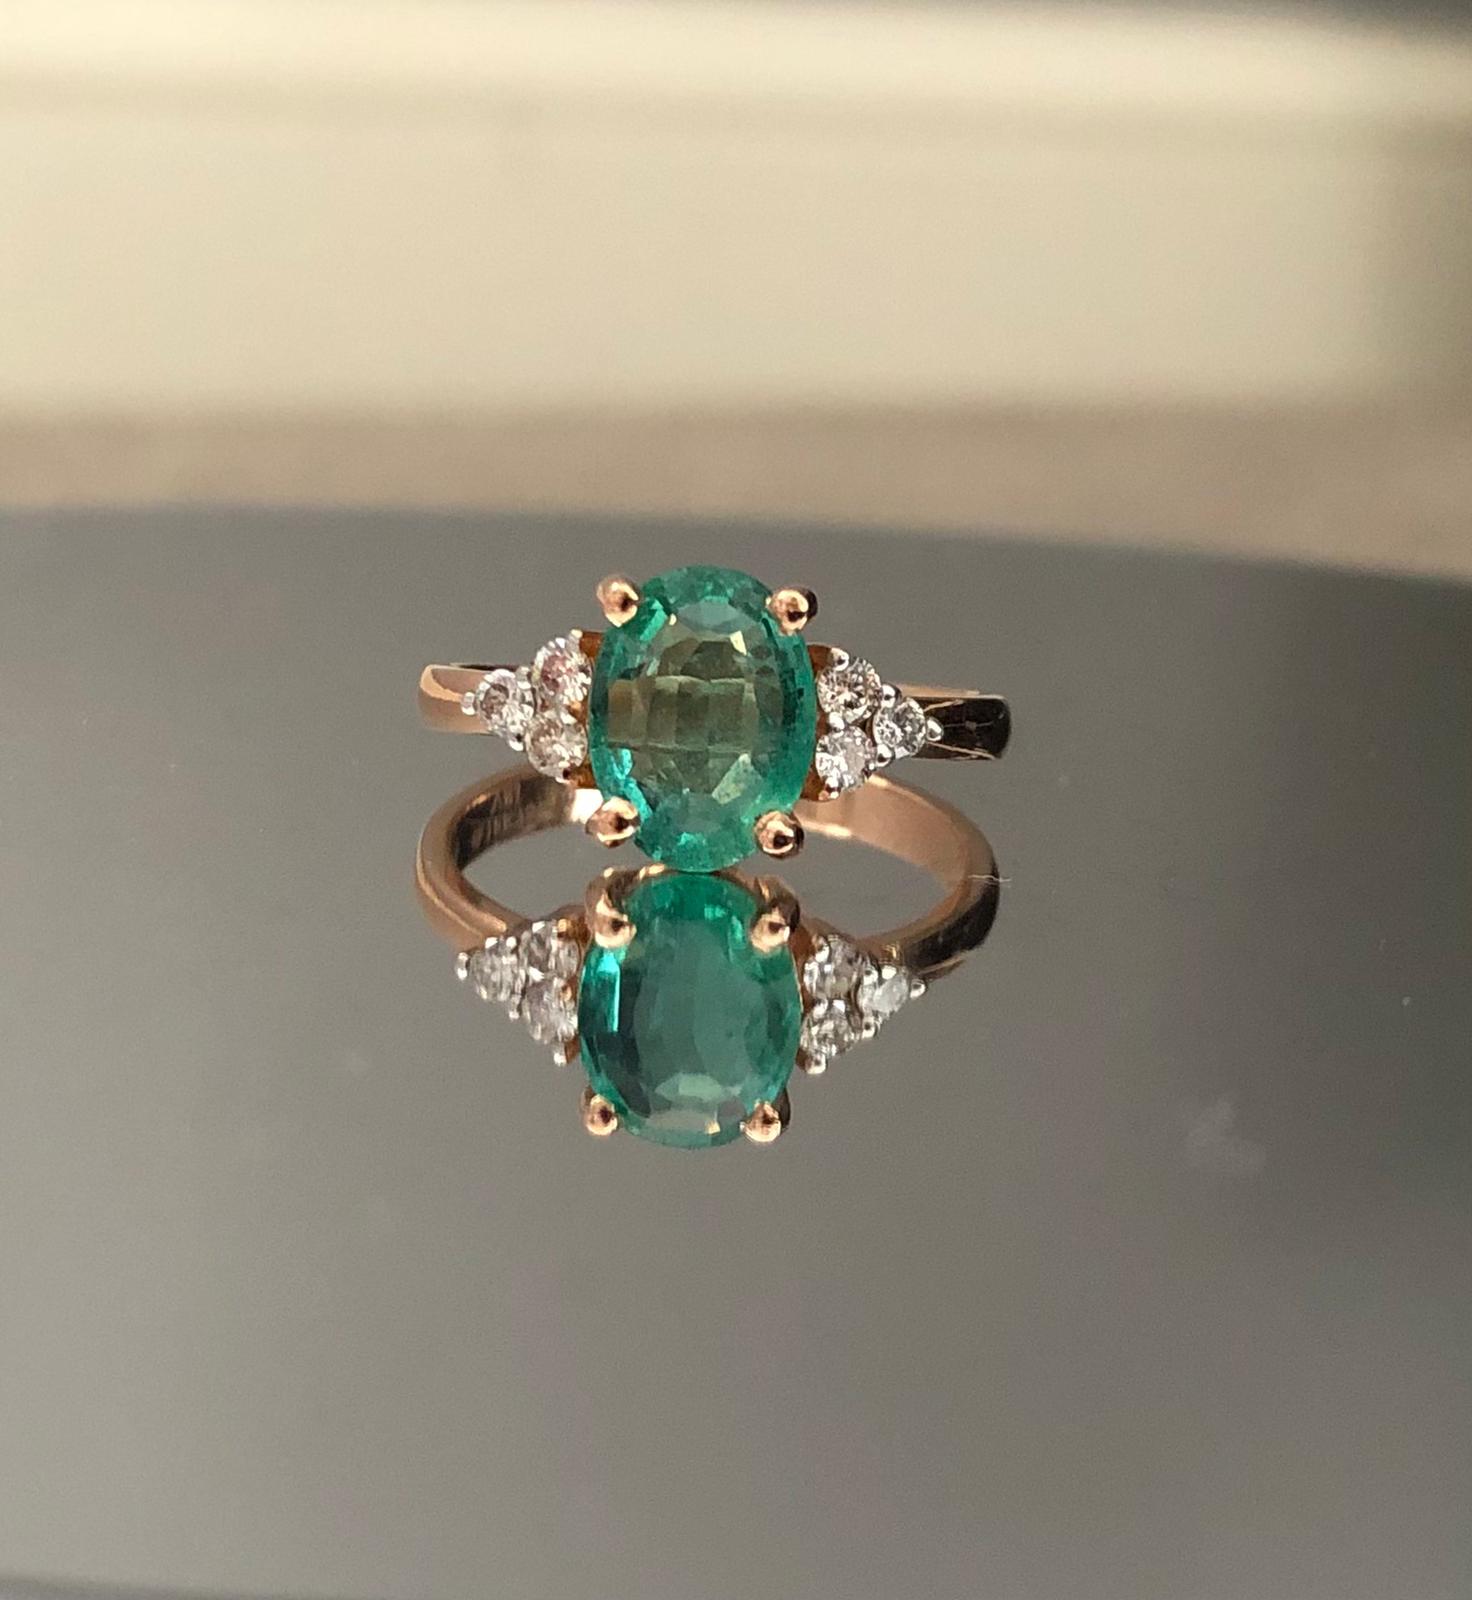 Beautiful 1.83 Carat Natural Emerald Ring With Natural Diamonds and 18k Gold